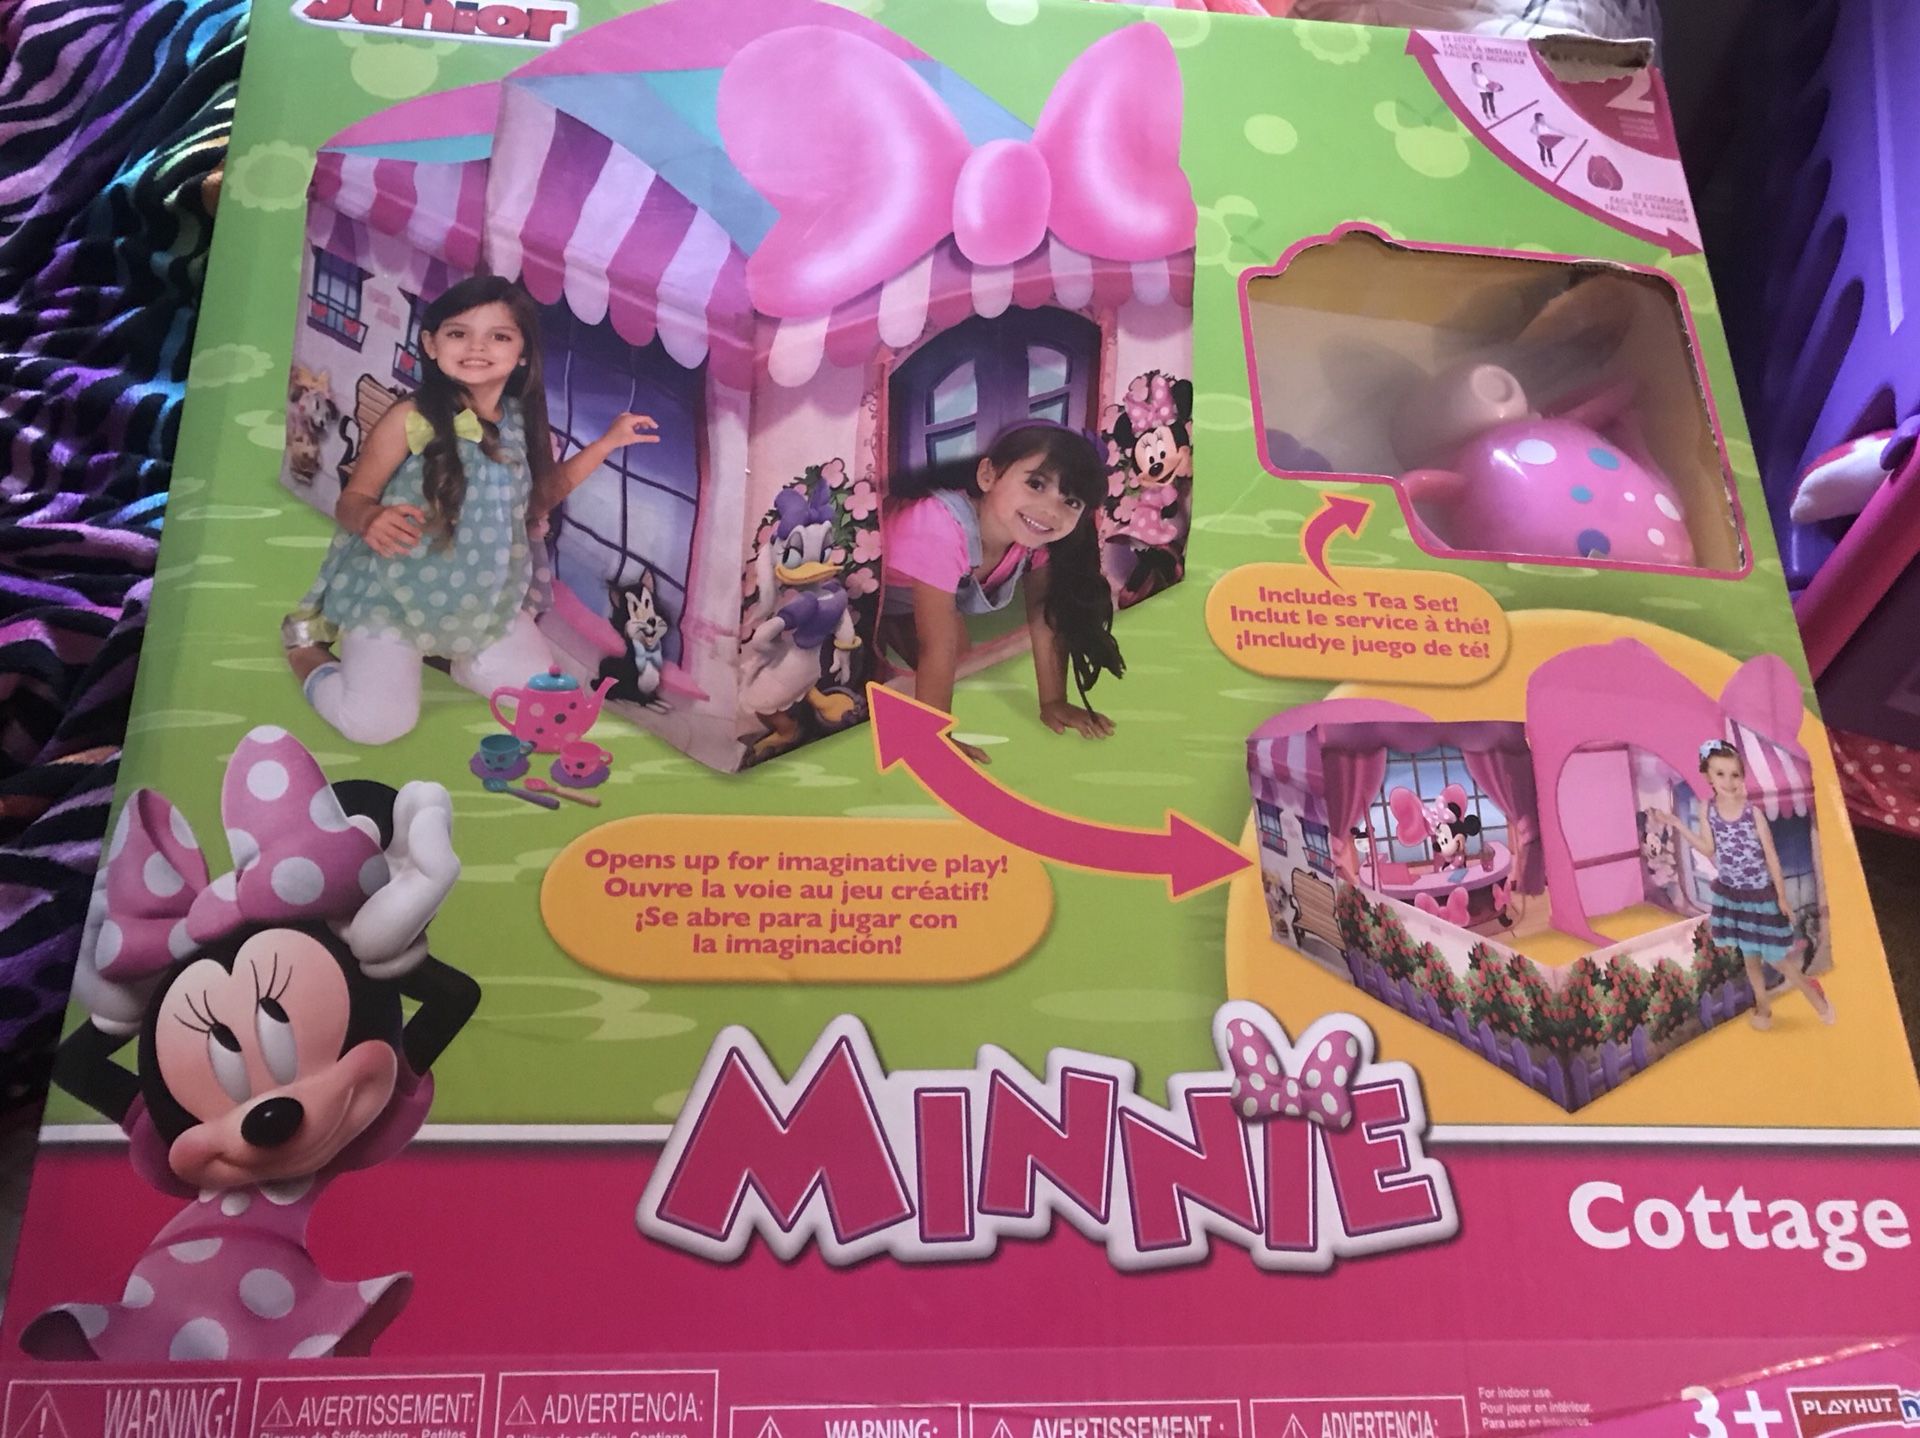 Minnie mouse cottage box